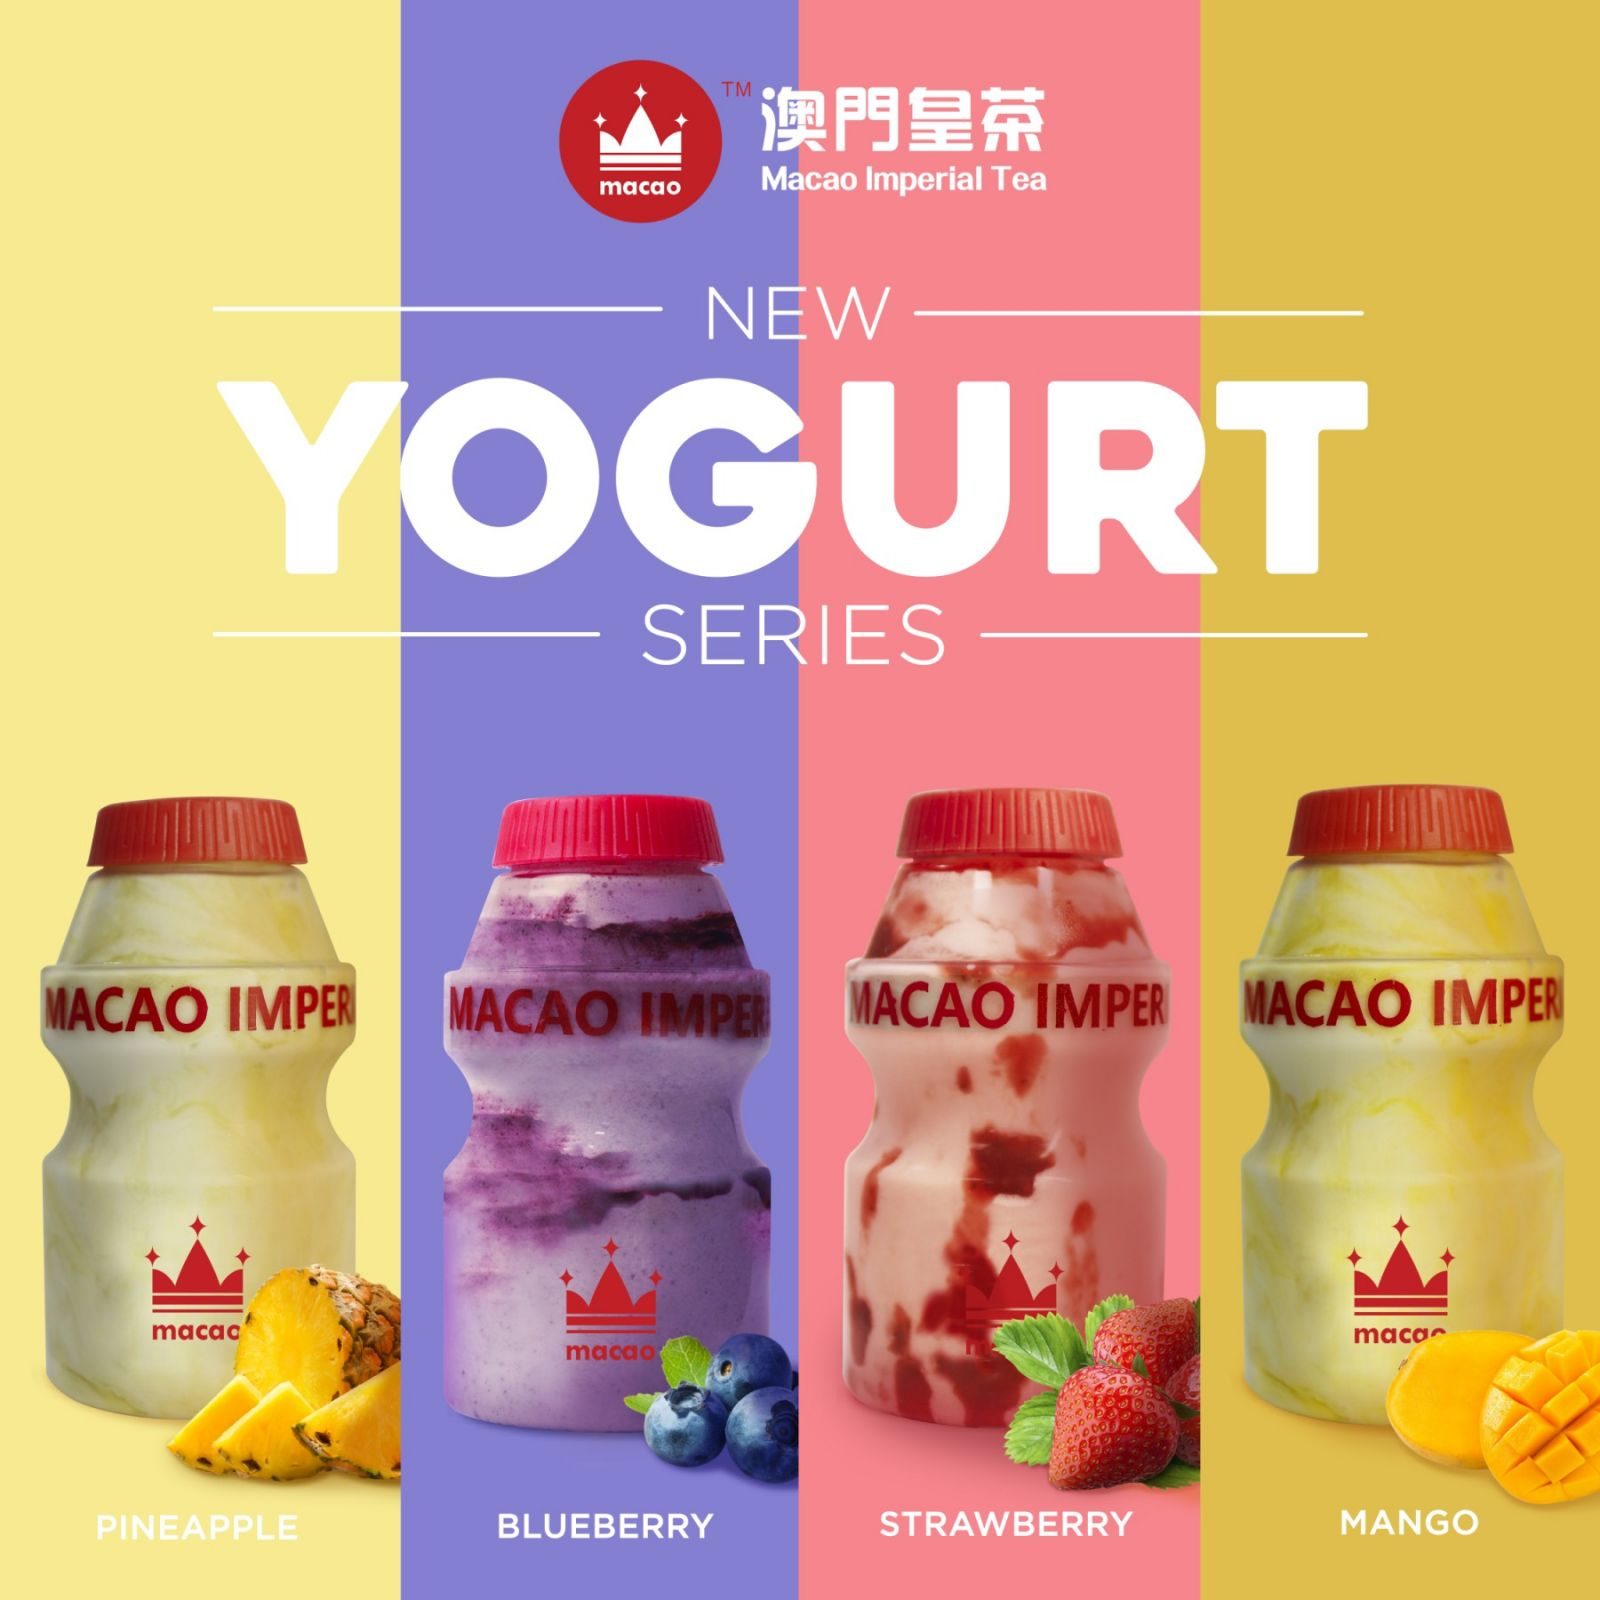 Macao Imperial Tea offers new Yogurt Series drinks